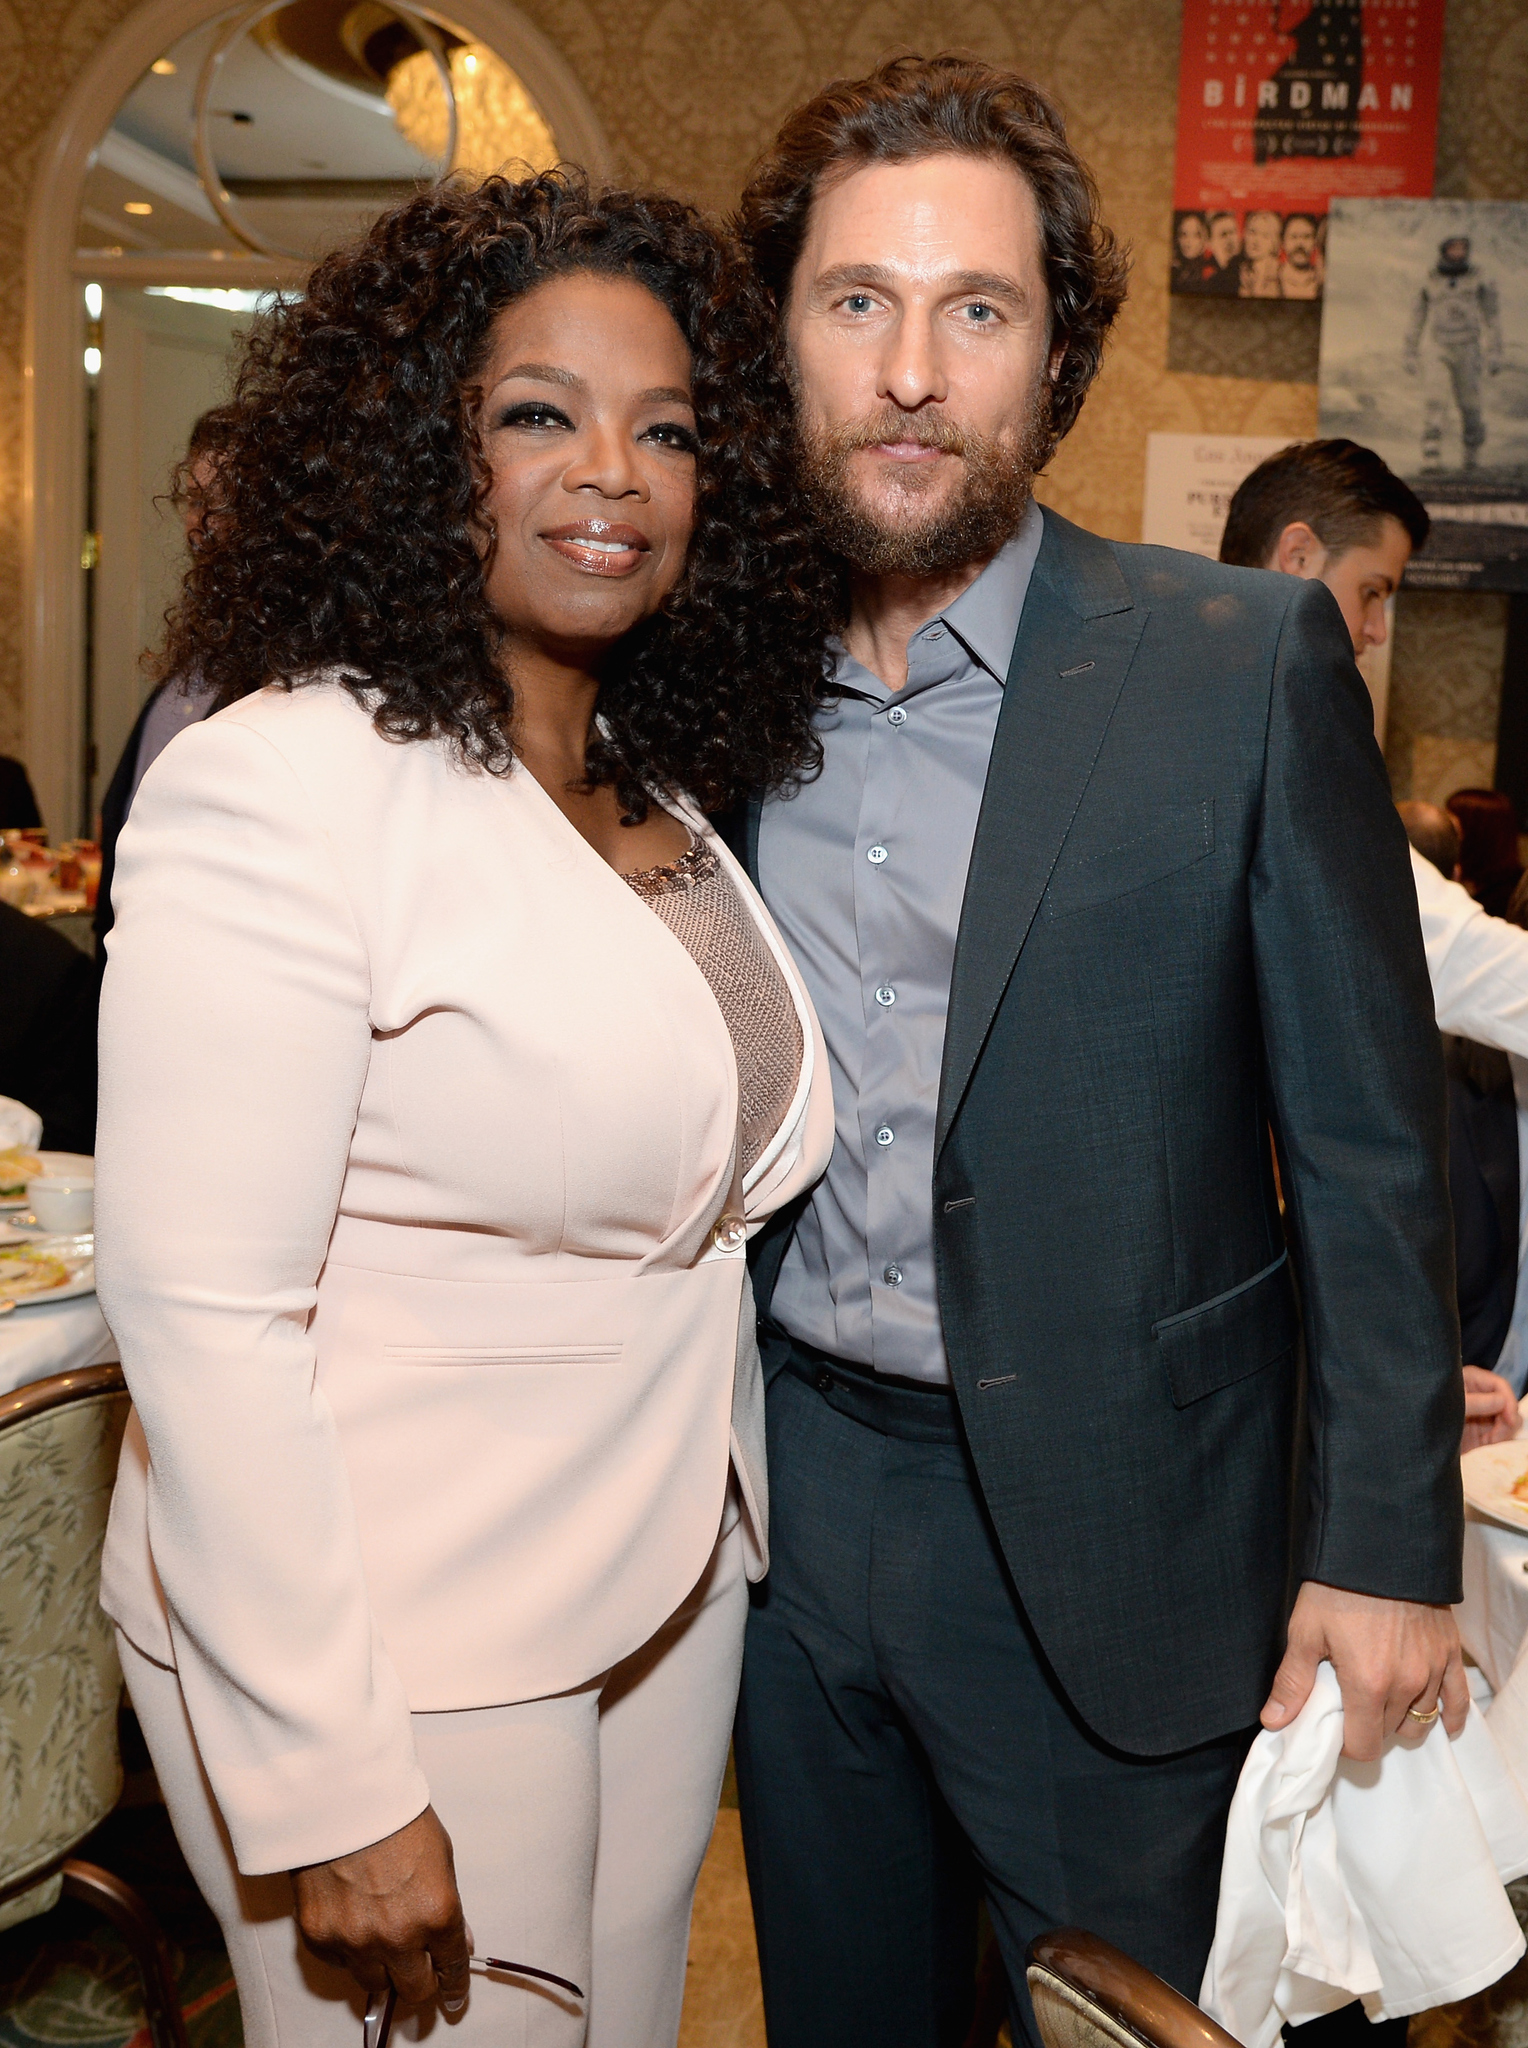 Matthew McConaughey and Oprah Winfrey